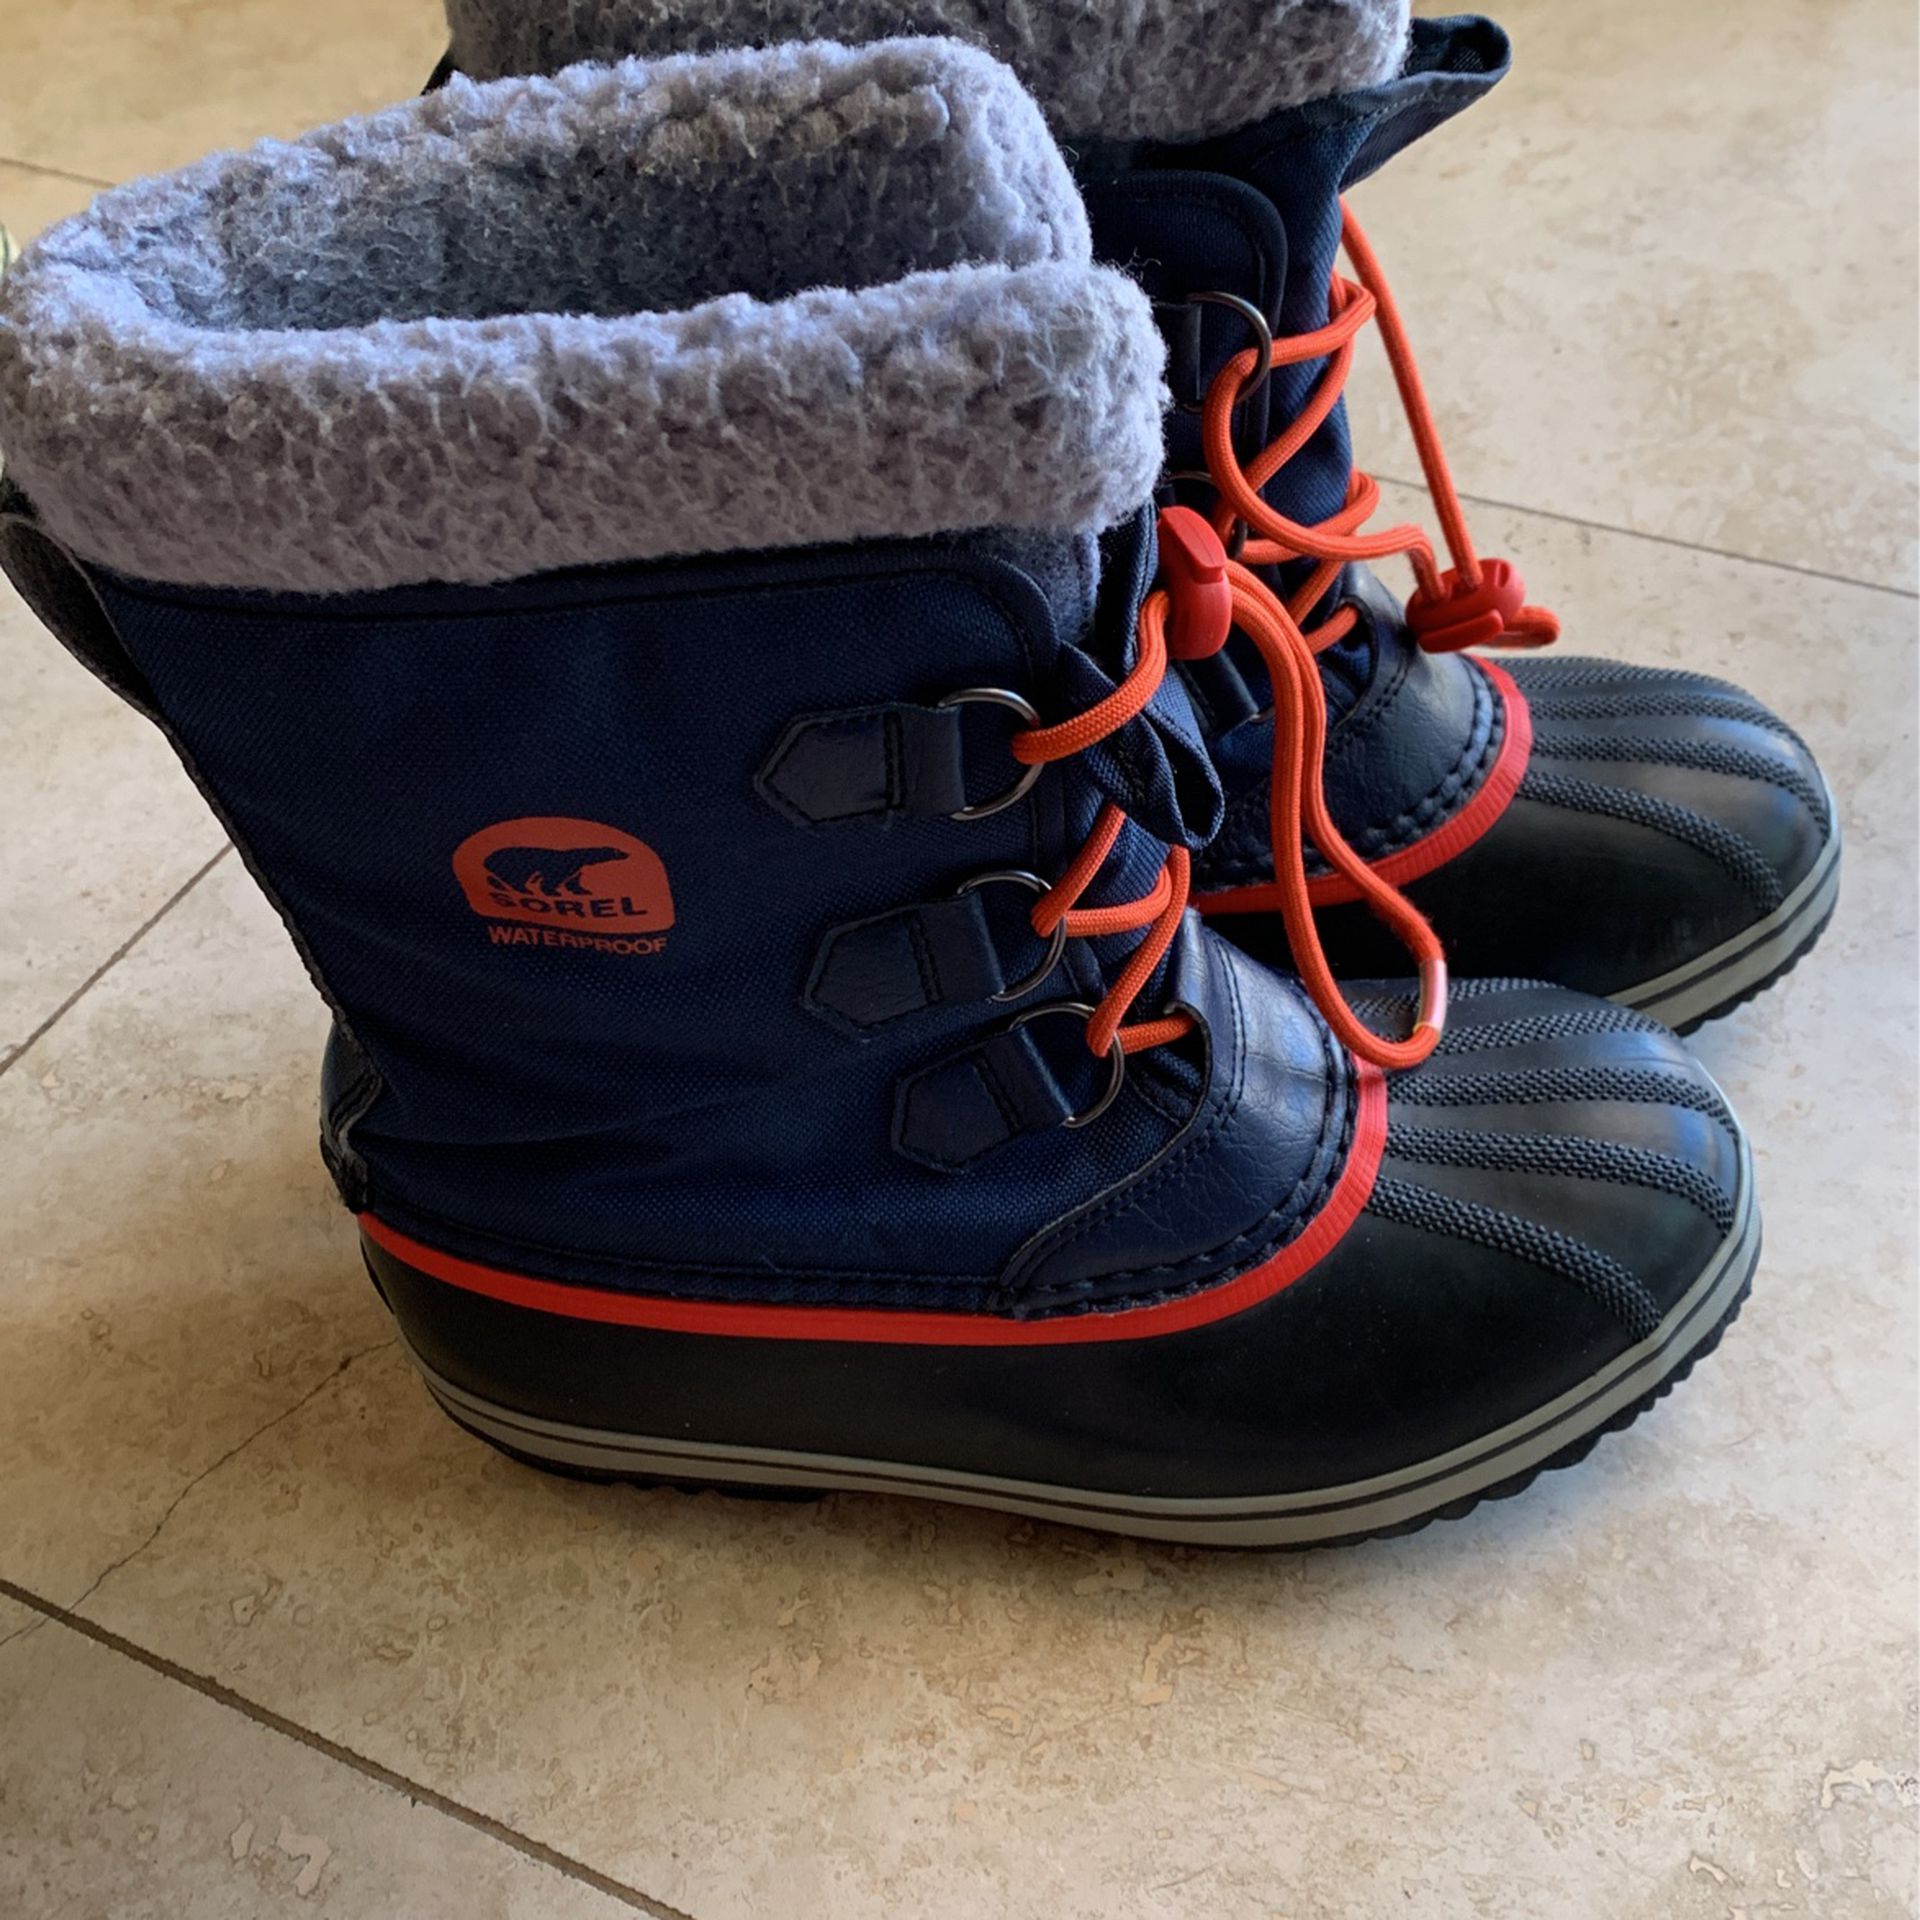 Sorel Waterproof Winter Boots Size 6, Fit more like a 7